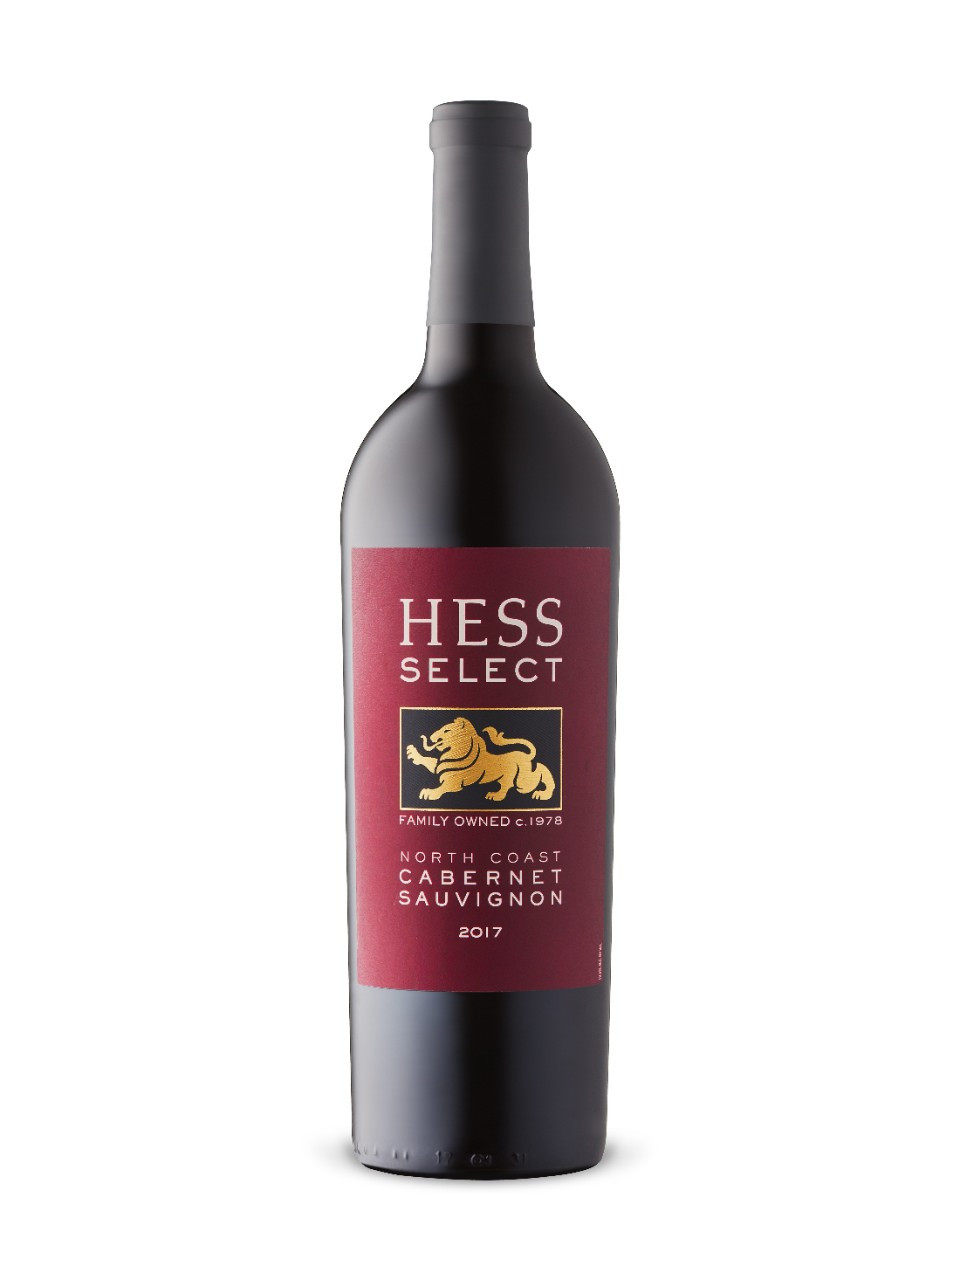 Hess select cabernet sauvignon 2017 cabernet sauvignon blend